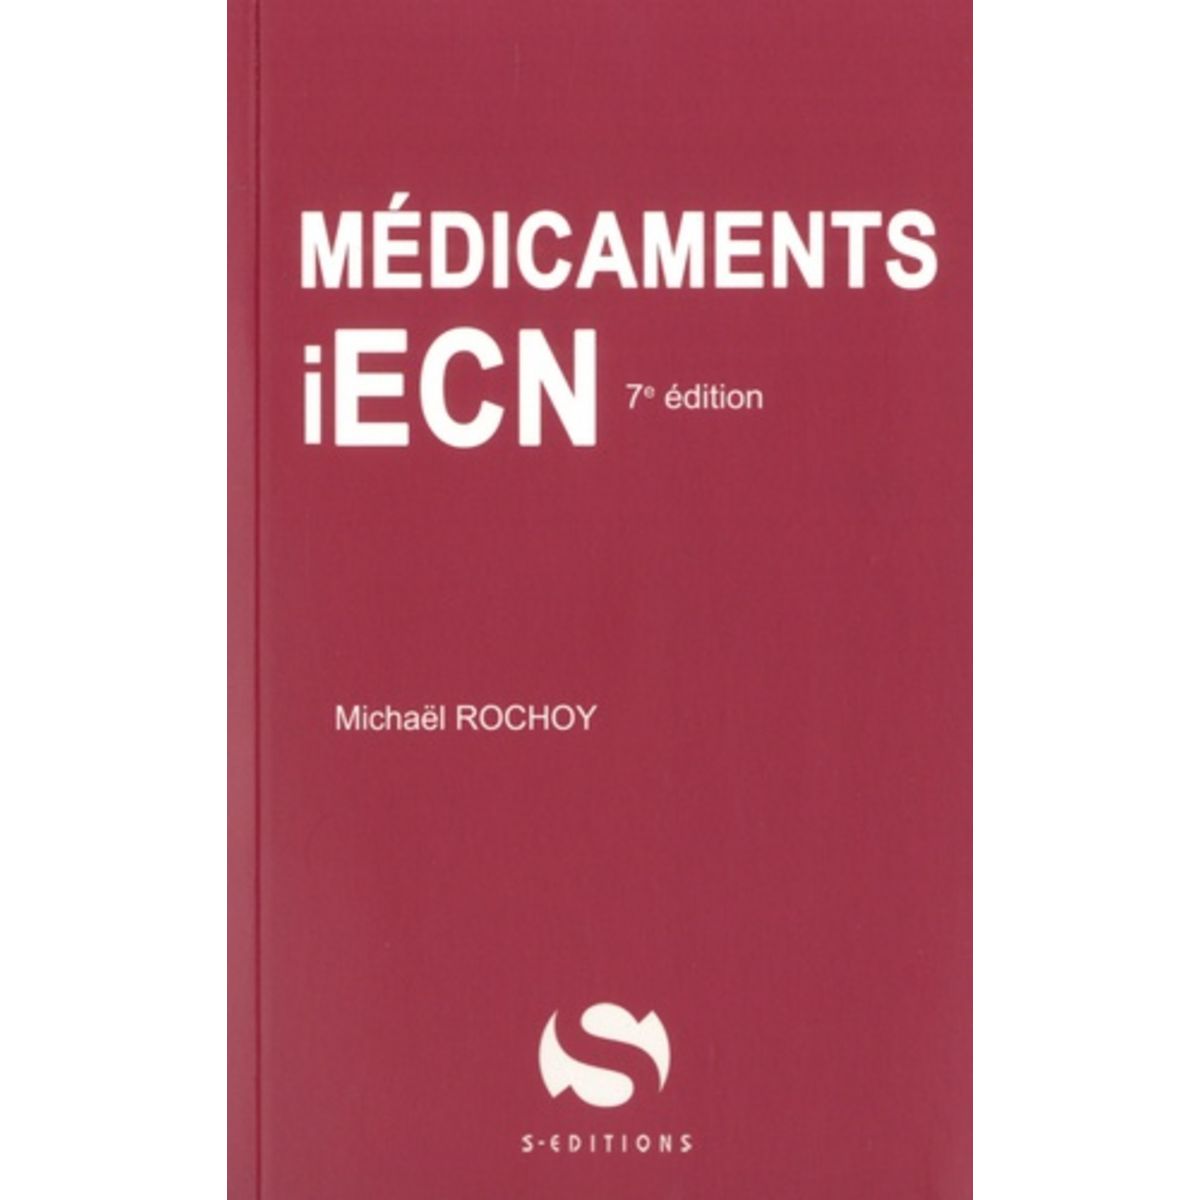  MEDICAMENTS AUX ECN. 7E EDITION, Rochoy Michaël